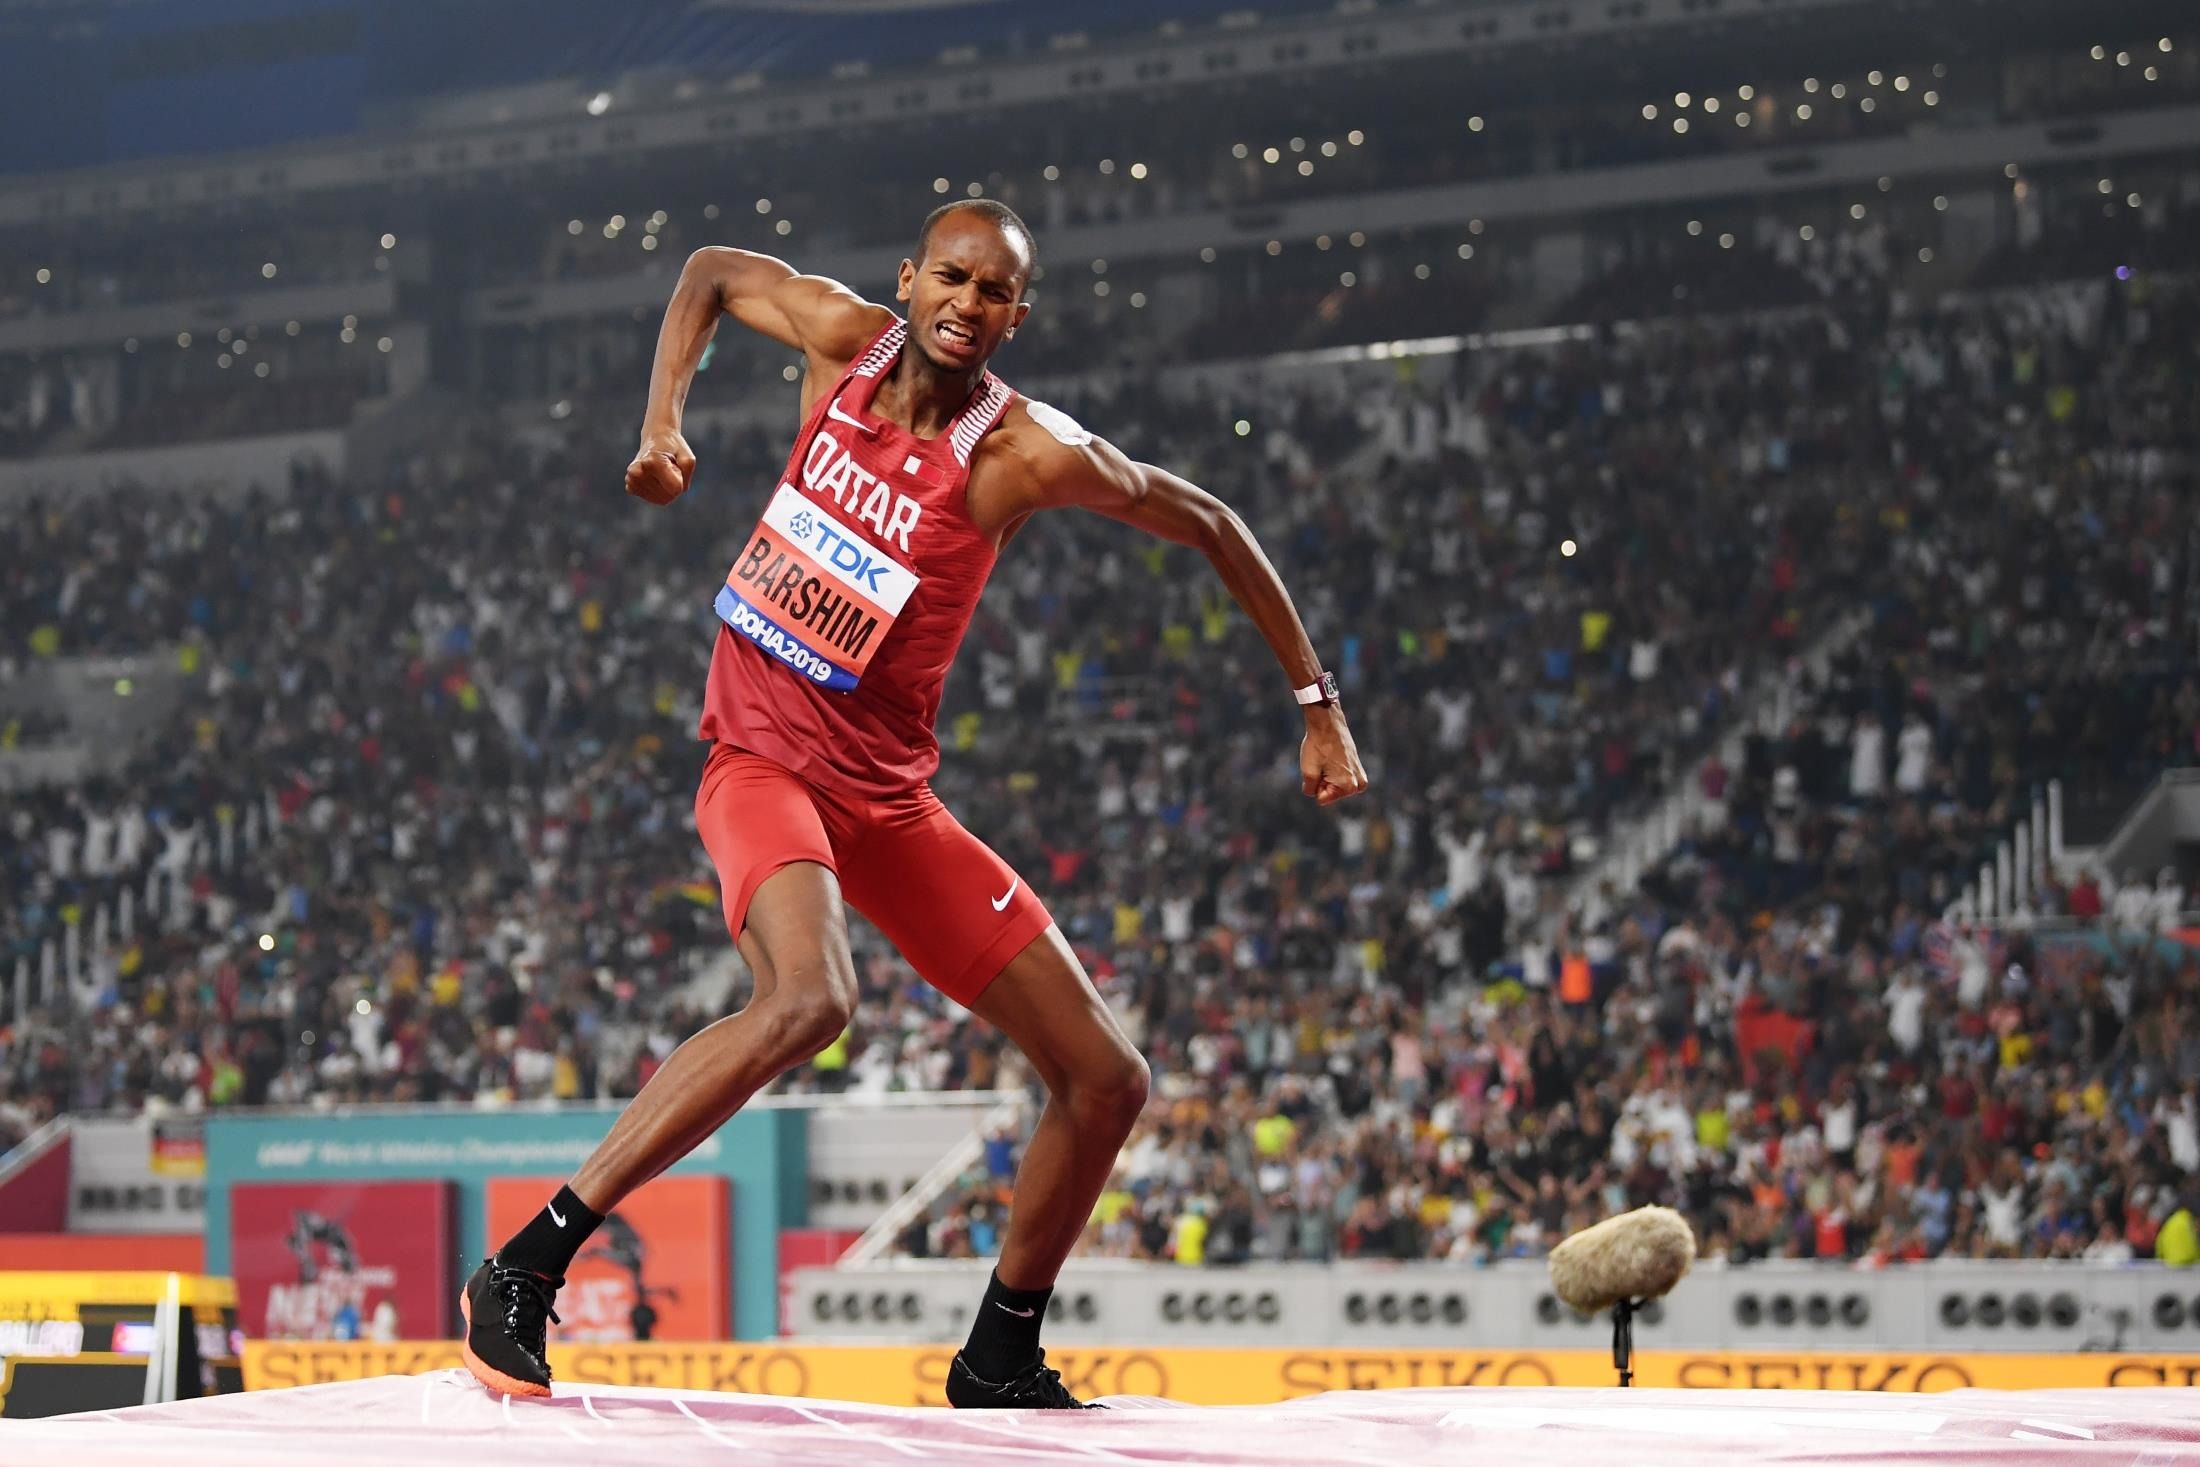 Mutaz Barshim charging up the crowd at the IAAF World Athletics Championships Doha 2019